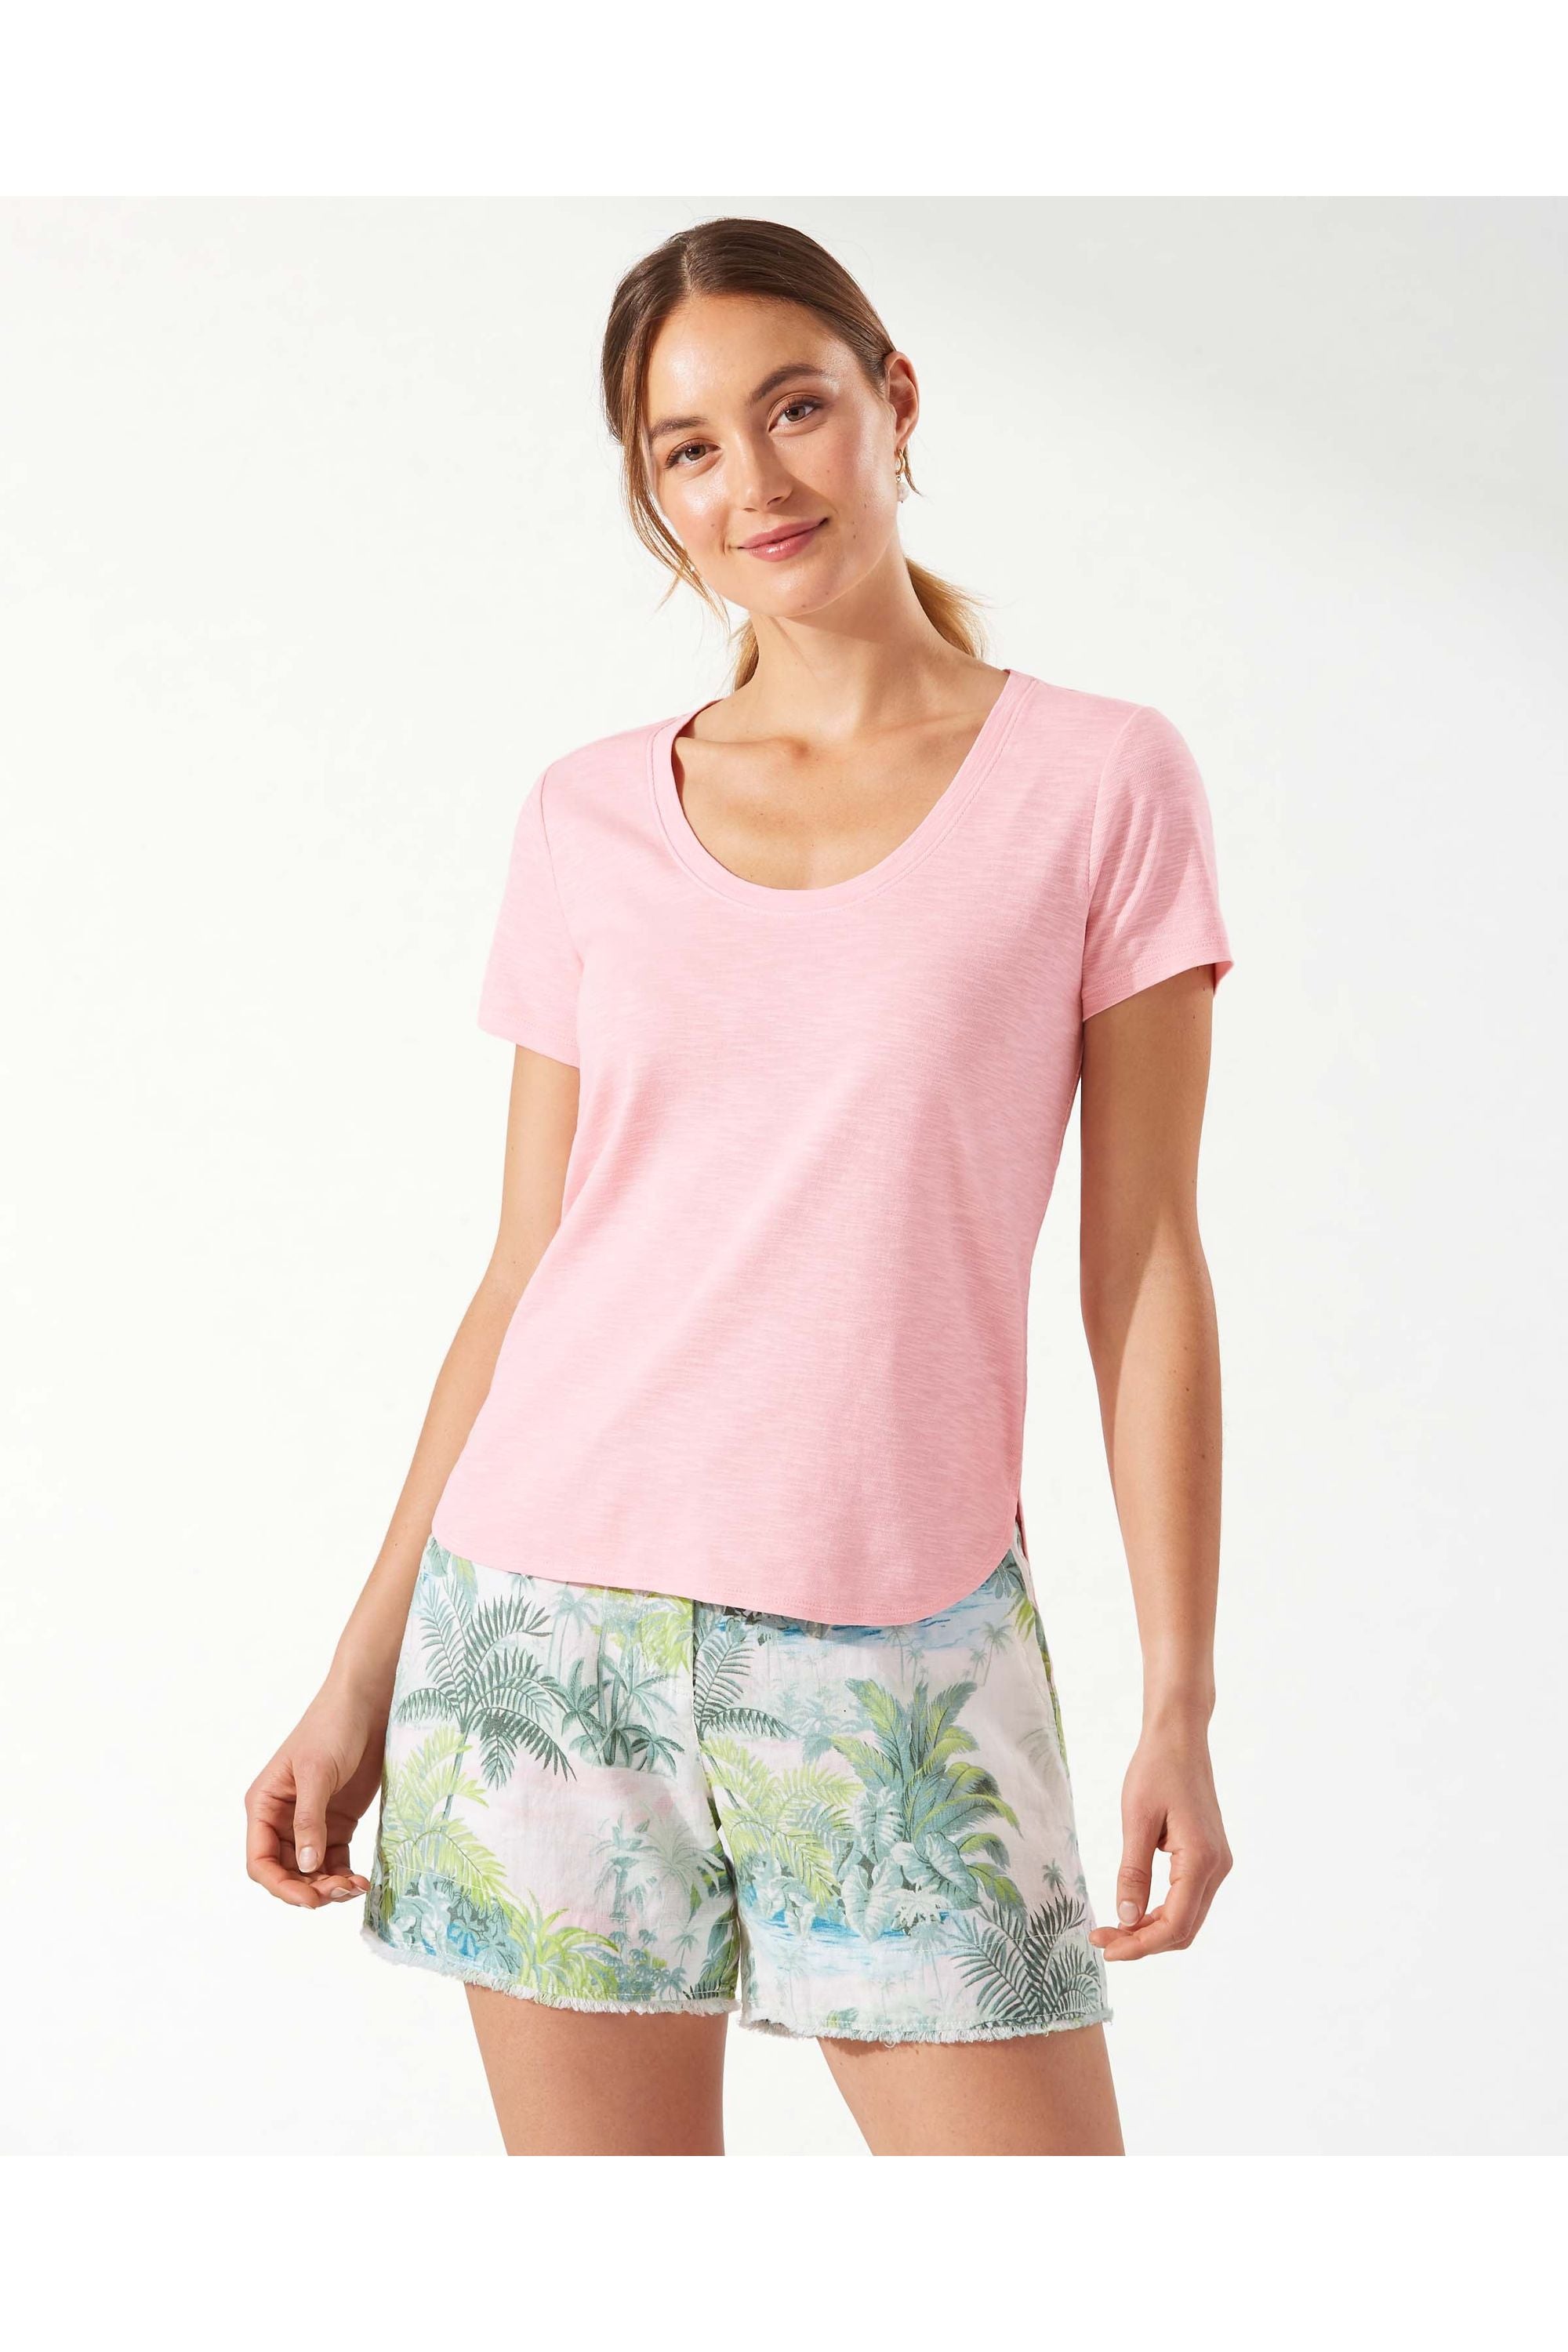 Tommy Bahama Ashby Short-Sleeve T-Shirt - Style SW221034, pink bikini heather, front